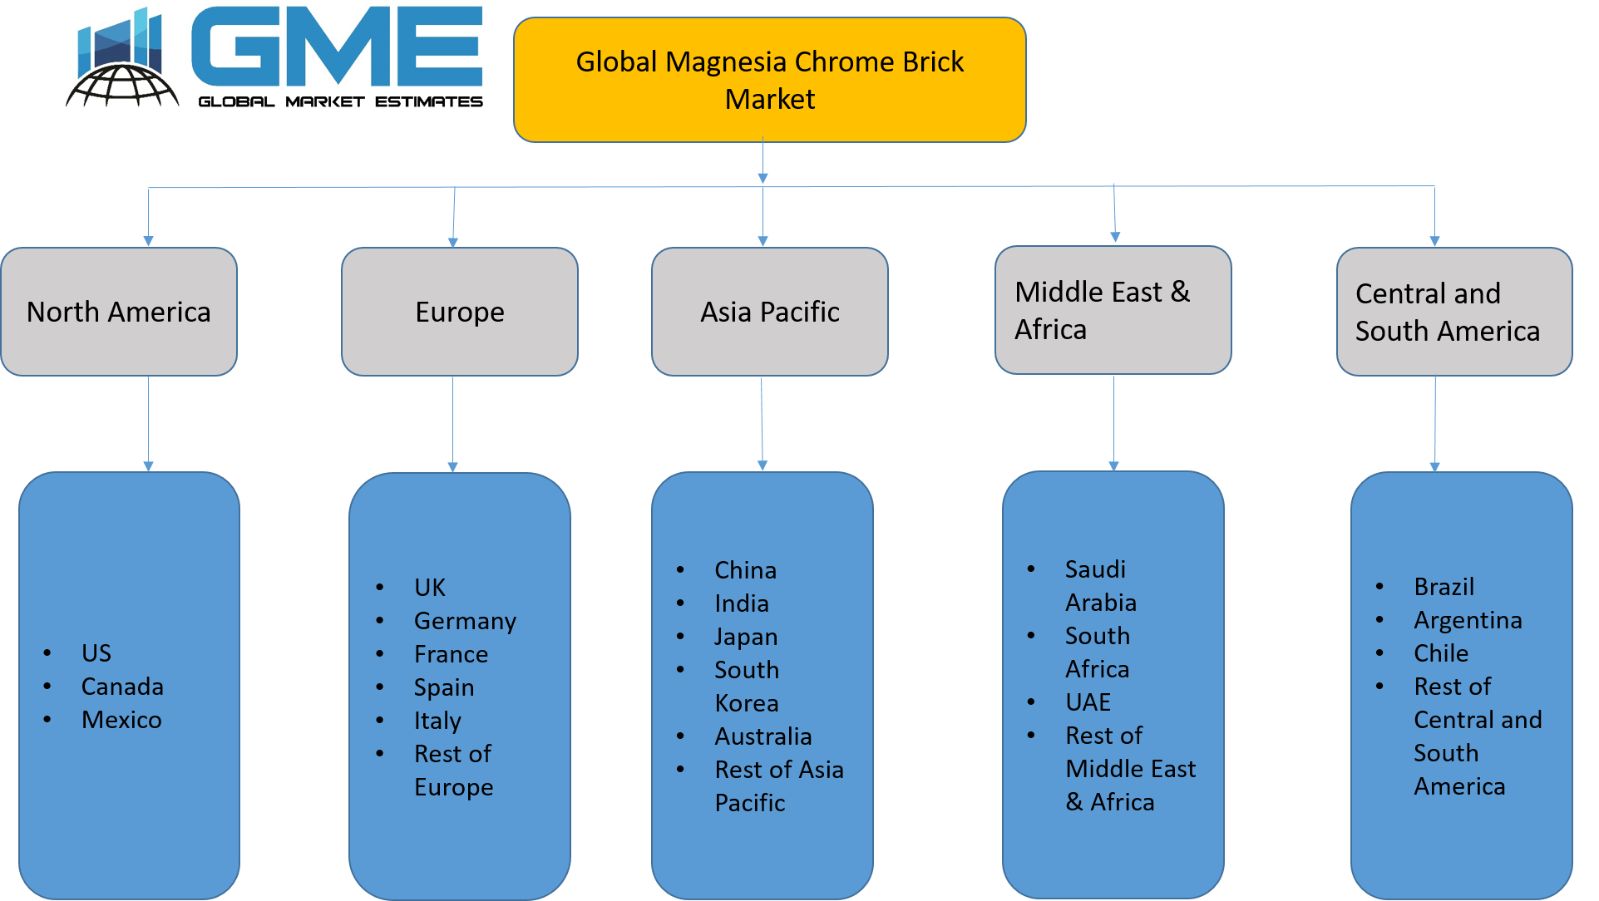 Global Magnesia Chrome Brick Market - Regional Analysis